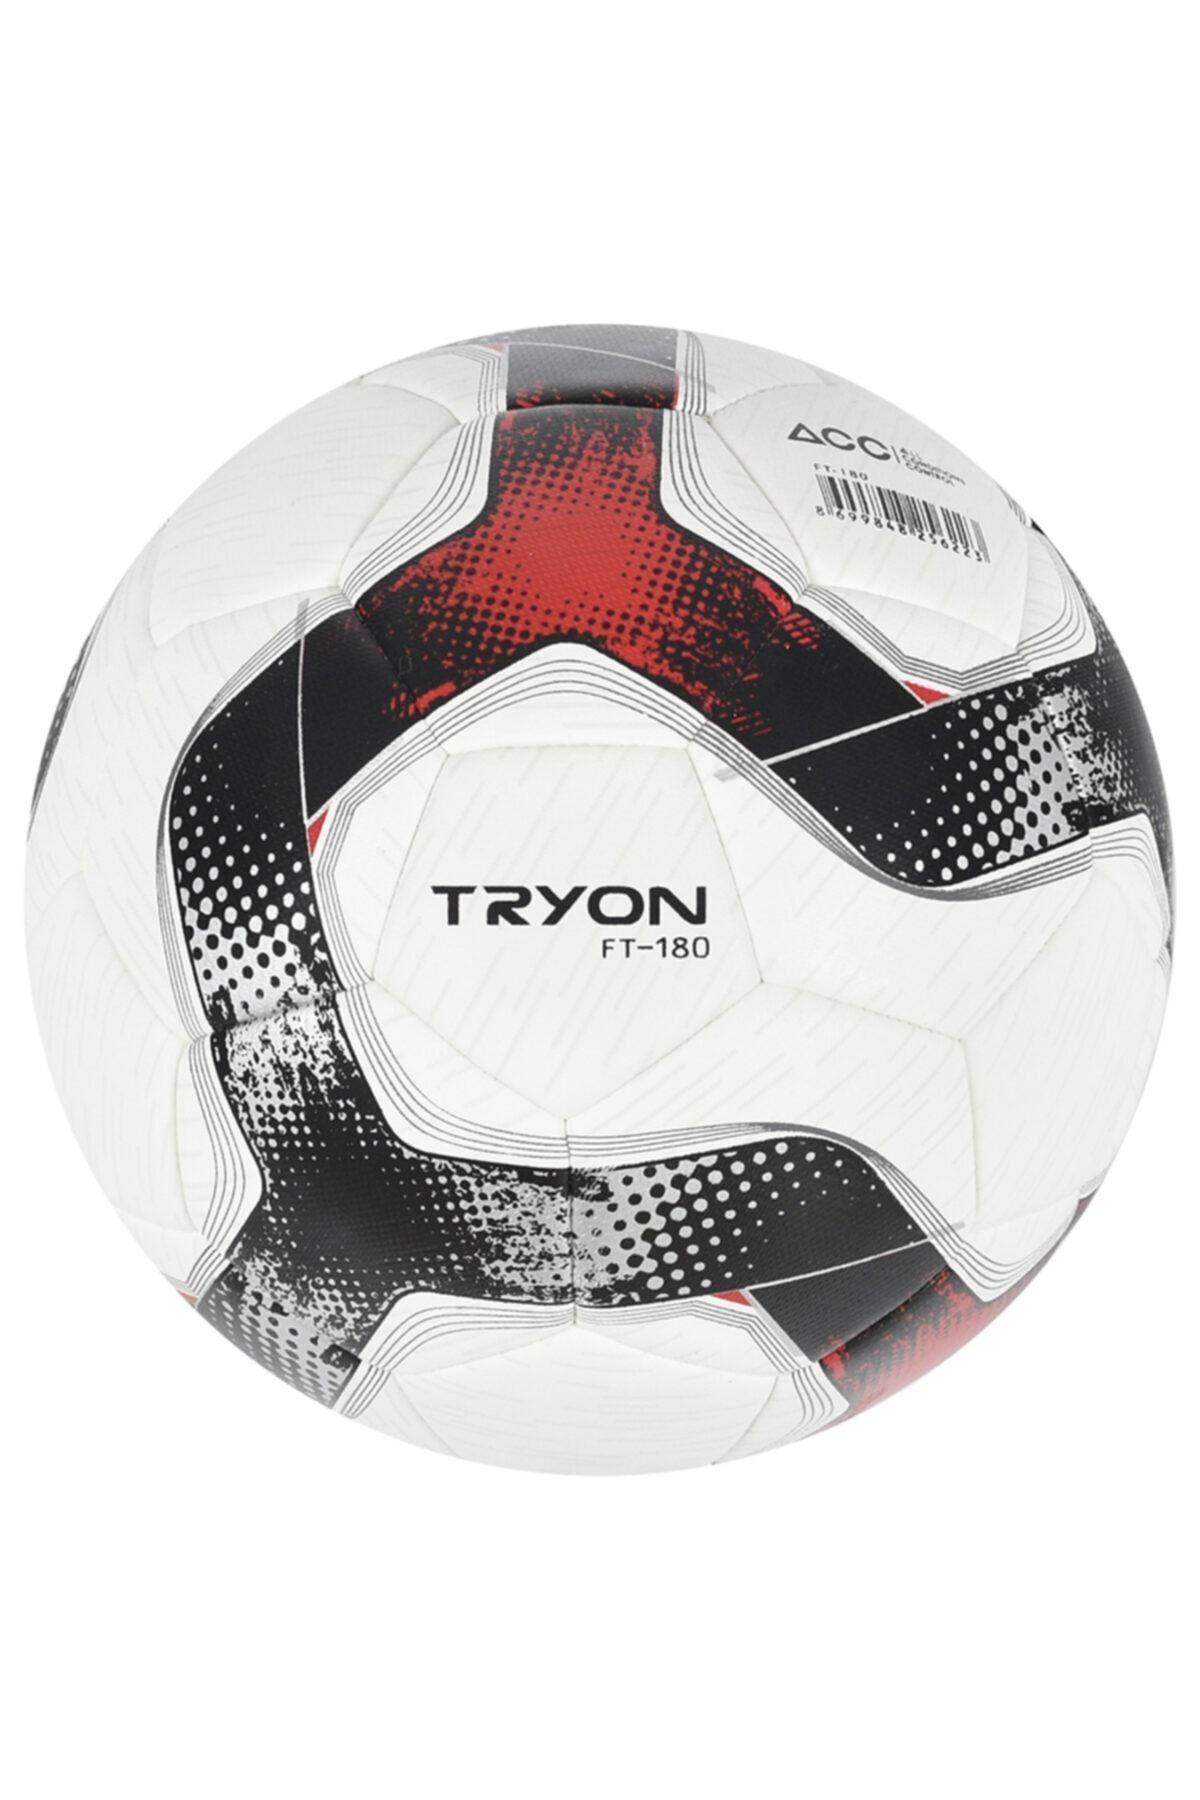 TRYON Ft-180 5 Numara Futbol Topu